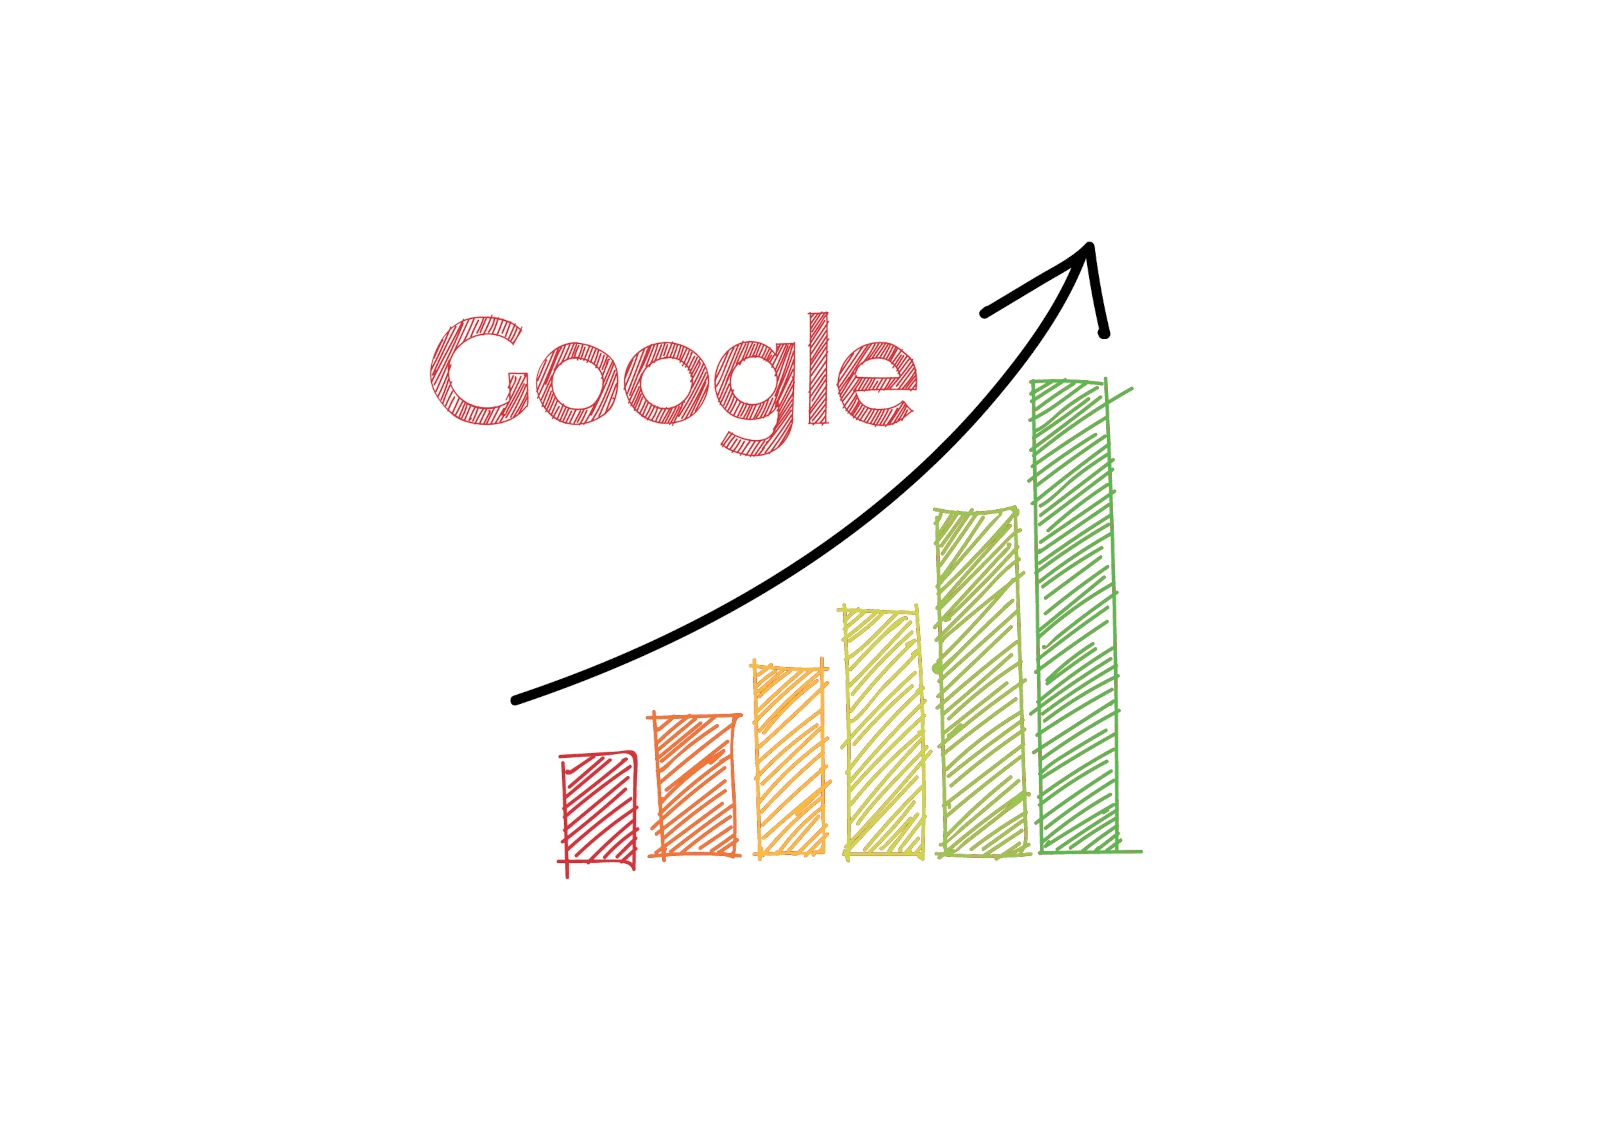 An illustration of Google rank increase